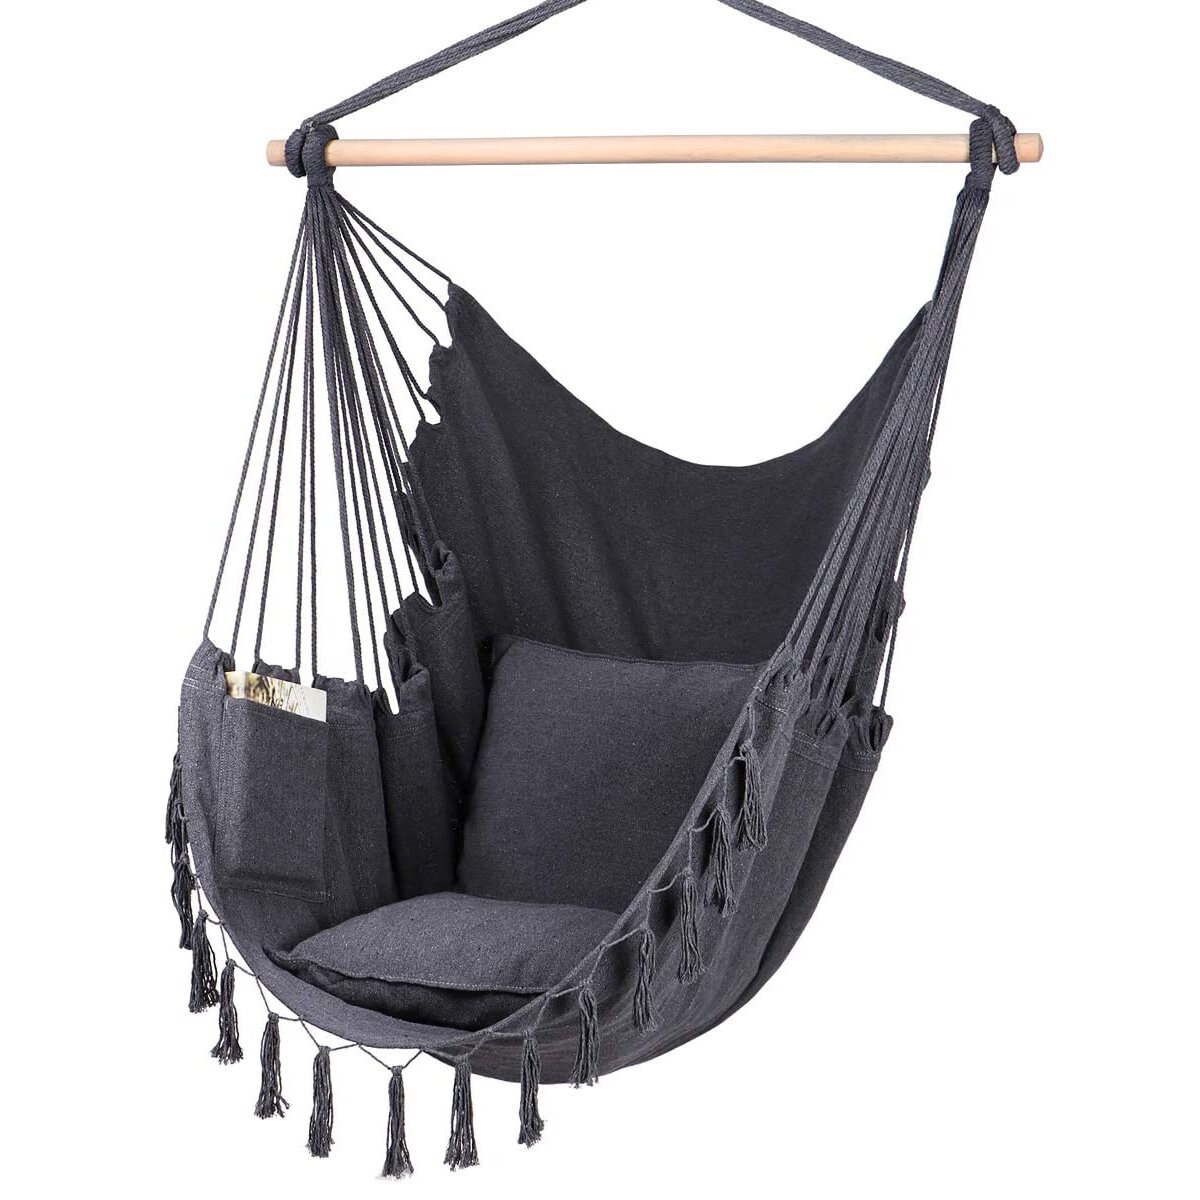 Max 330Lbs / 150KG Maca Chair Hanging Corda Swing com 2 almofadas incluídas Grande Tassel Hanging Chair com bolso